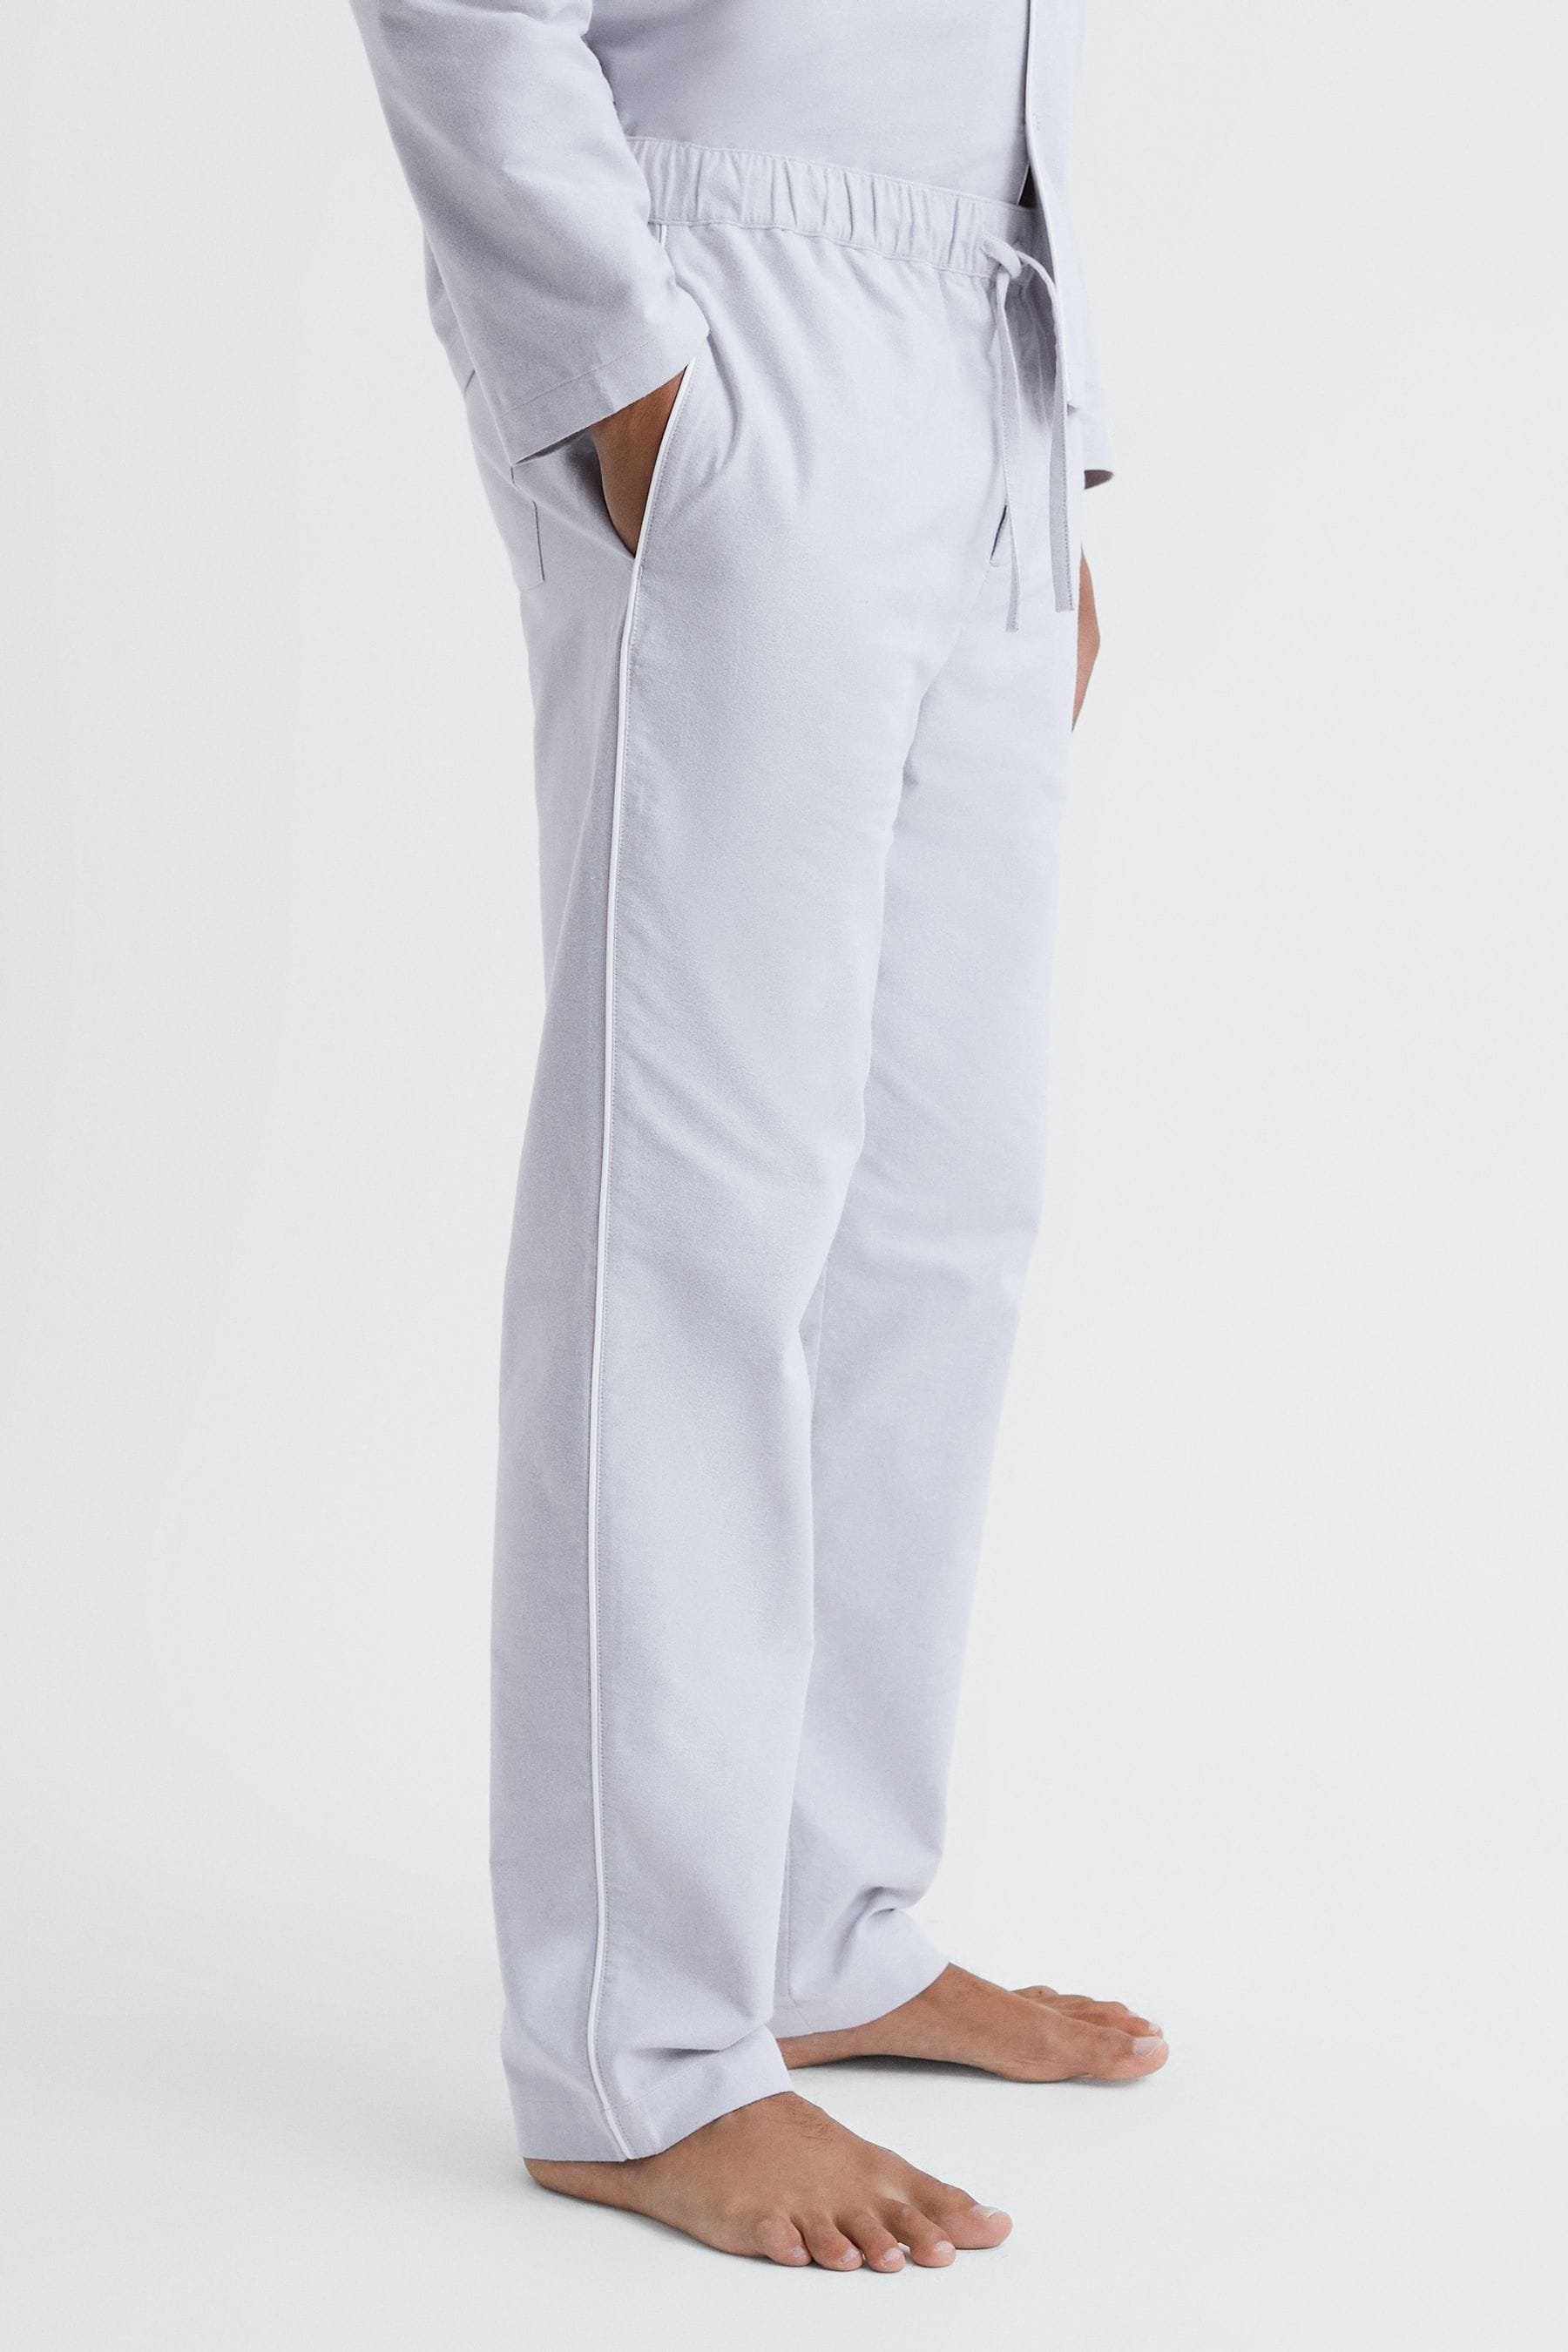 Reiss Farley - Ice Grey Cotton Drawstring Pyjama Bottoms, Xxl